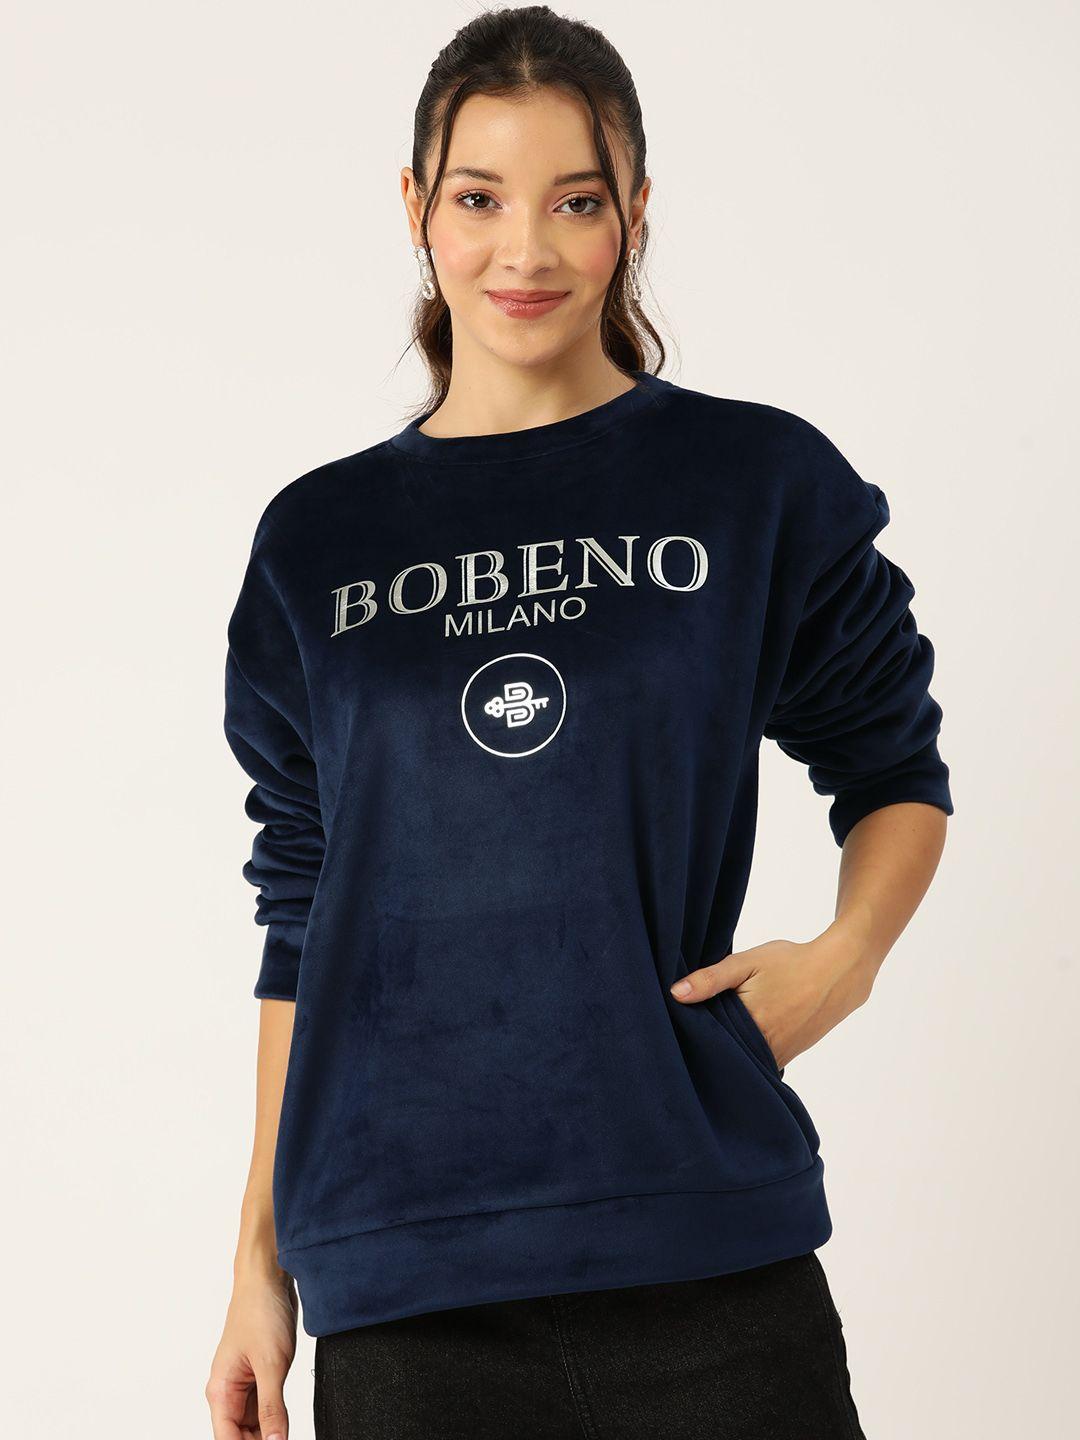 bobeno milano brand logo printed velvet longline sweatshirt